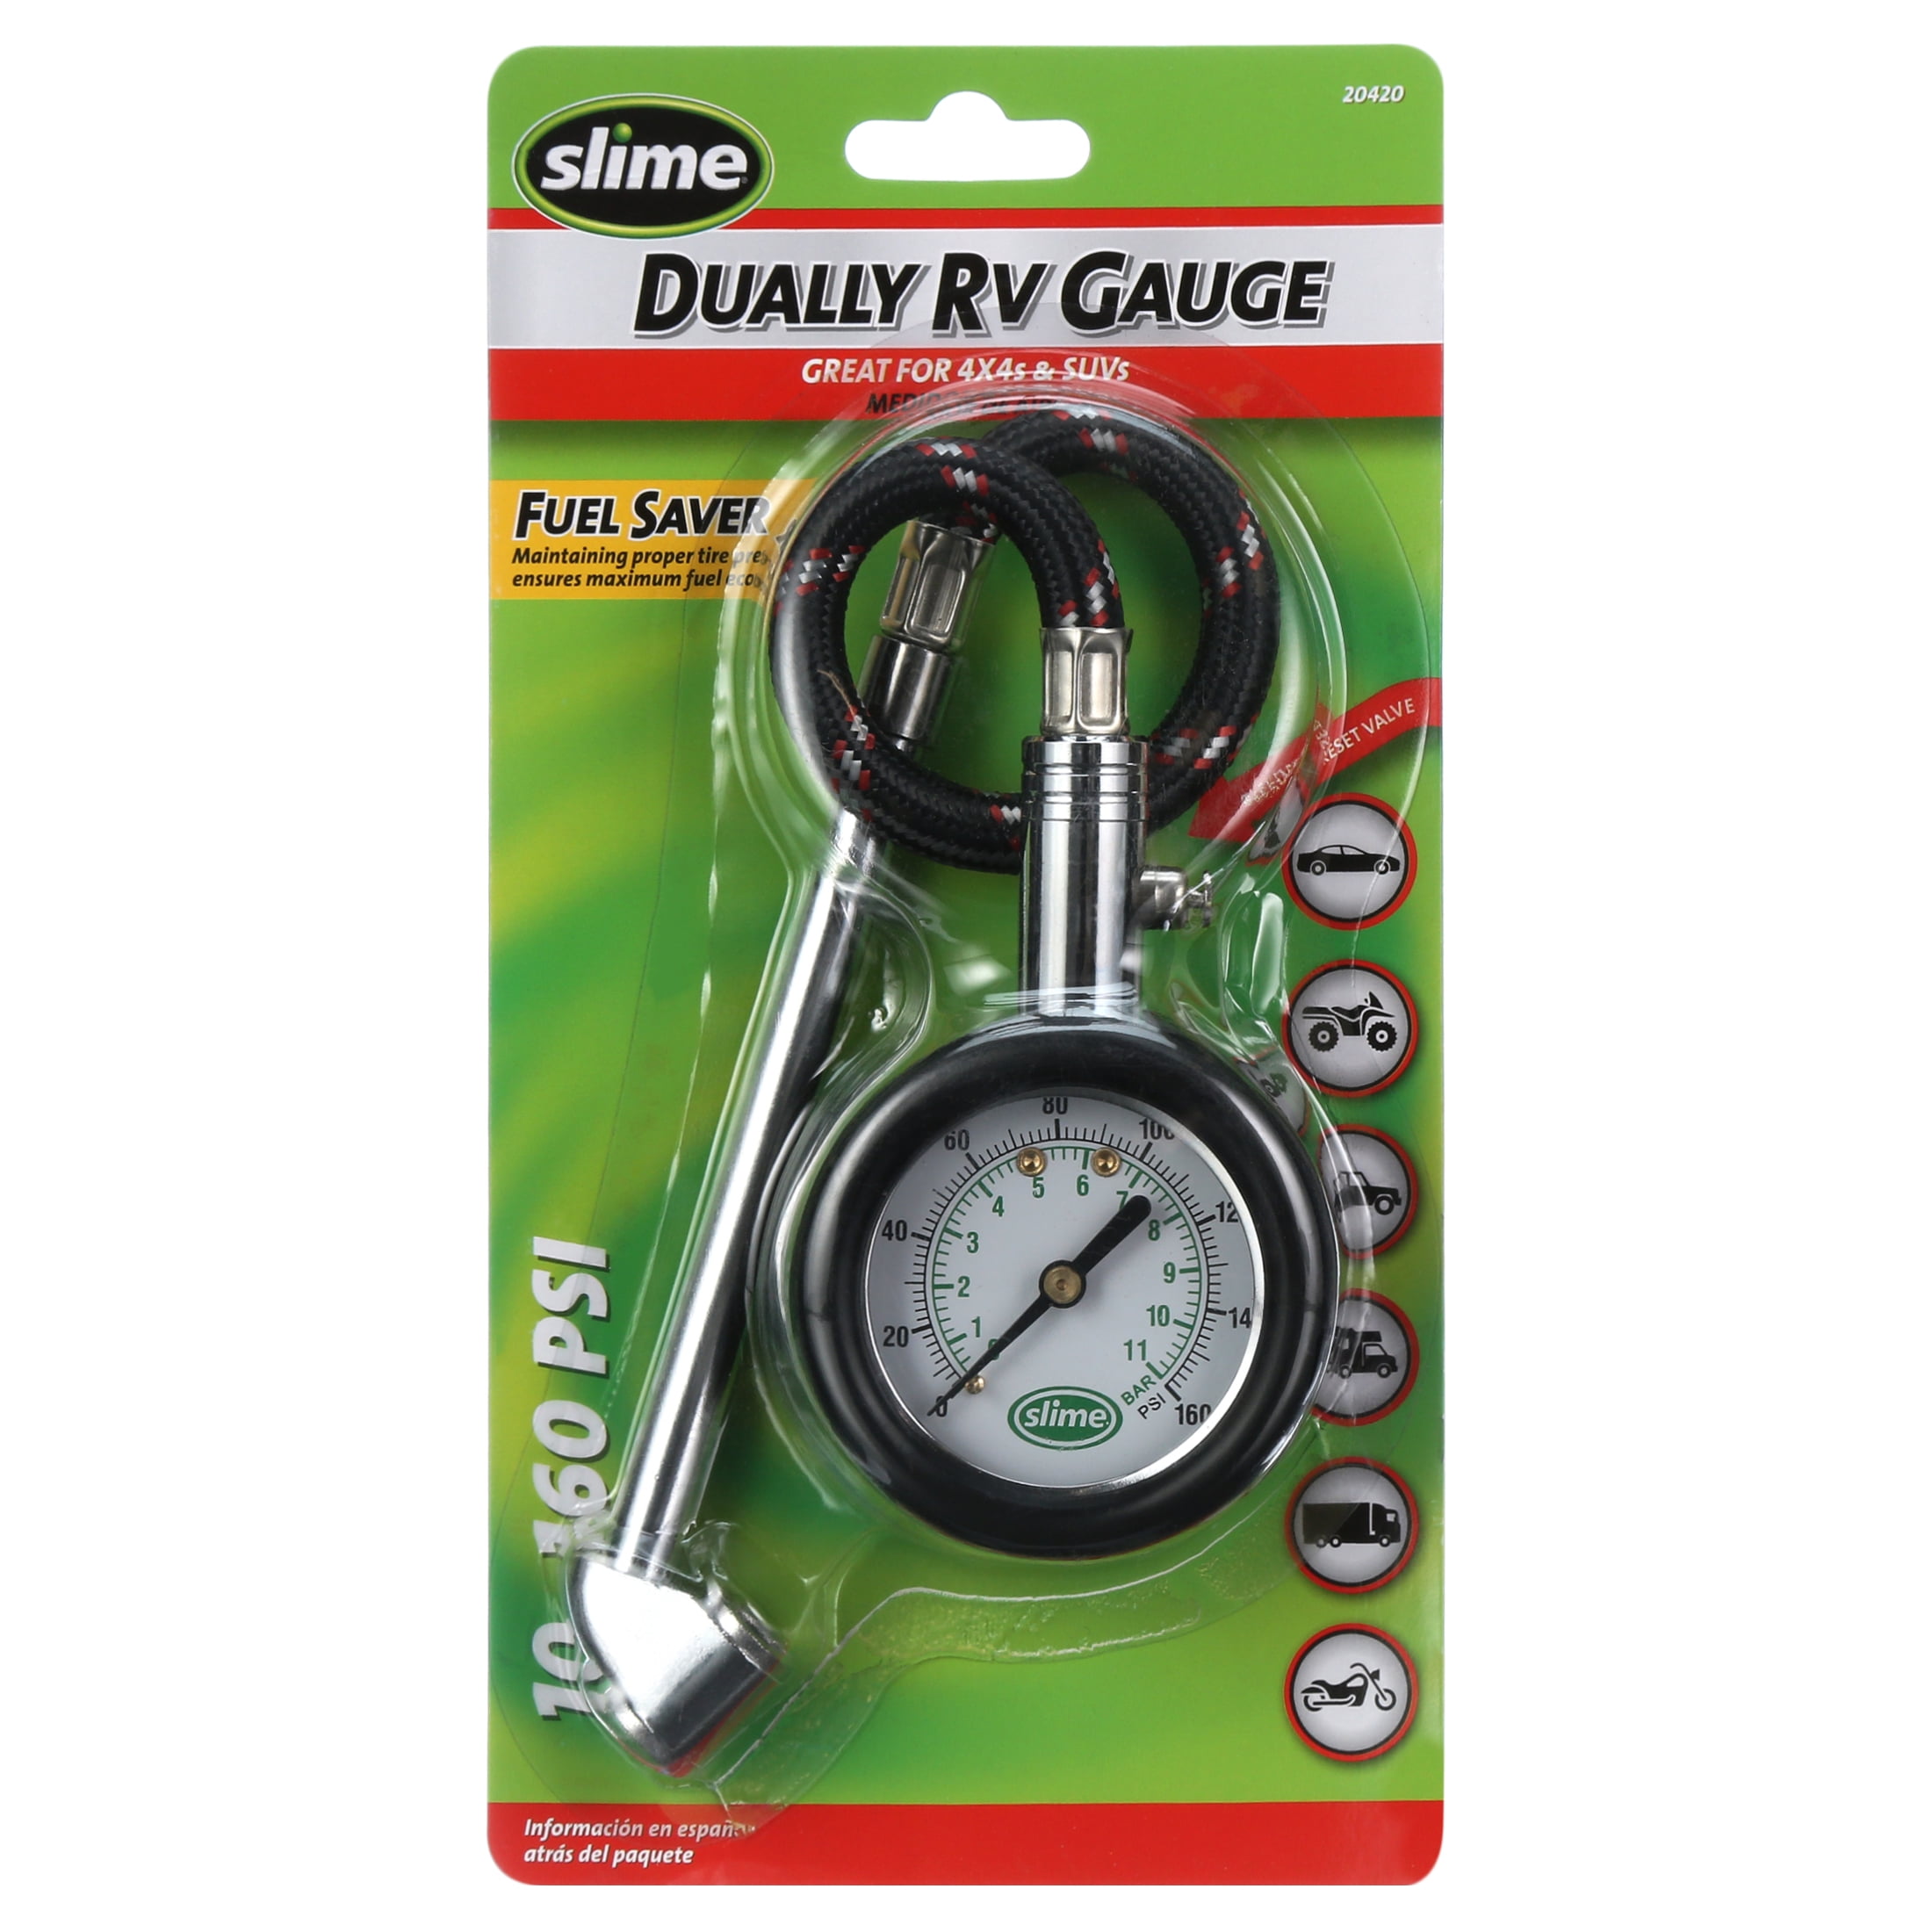 Slime Dually RV Dial Tire Pressure Gauge 10-160 Psi - 20420